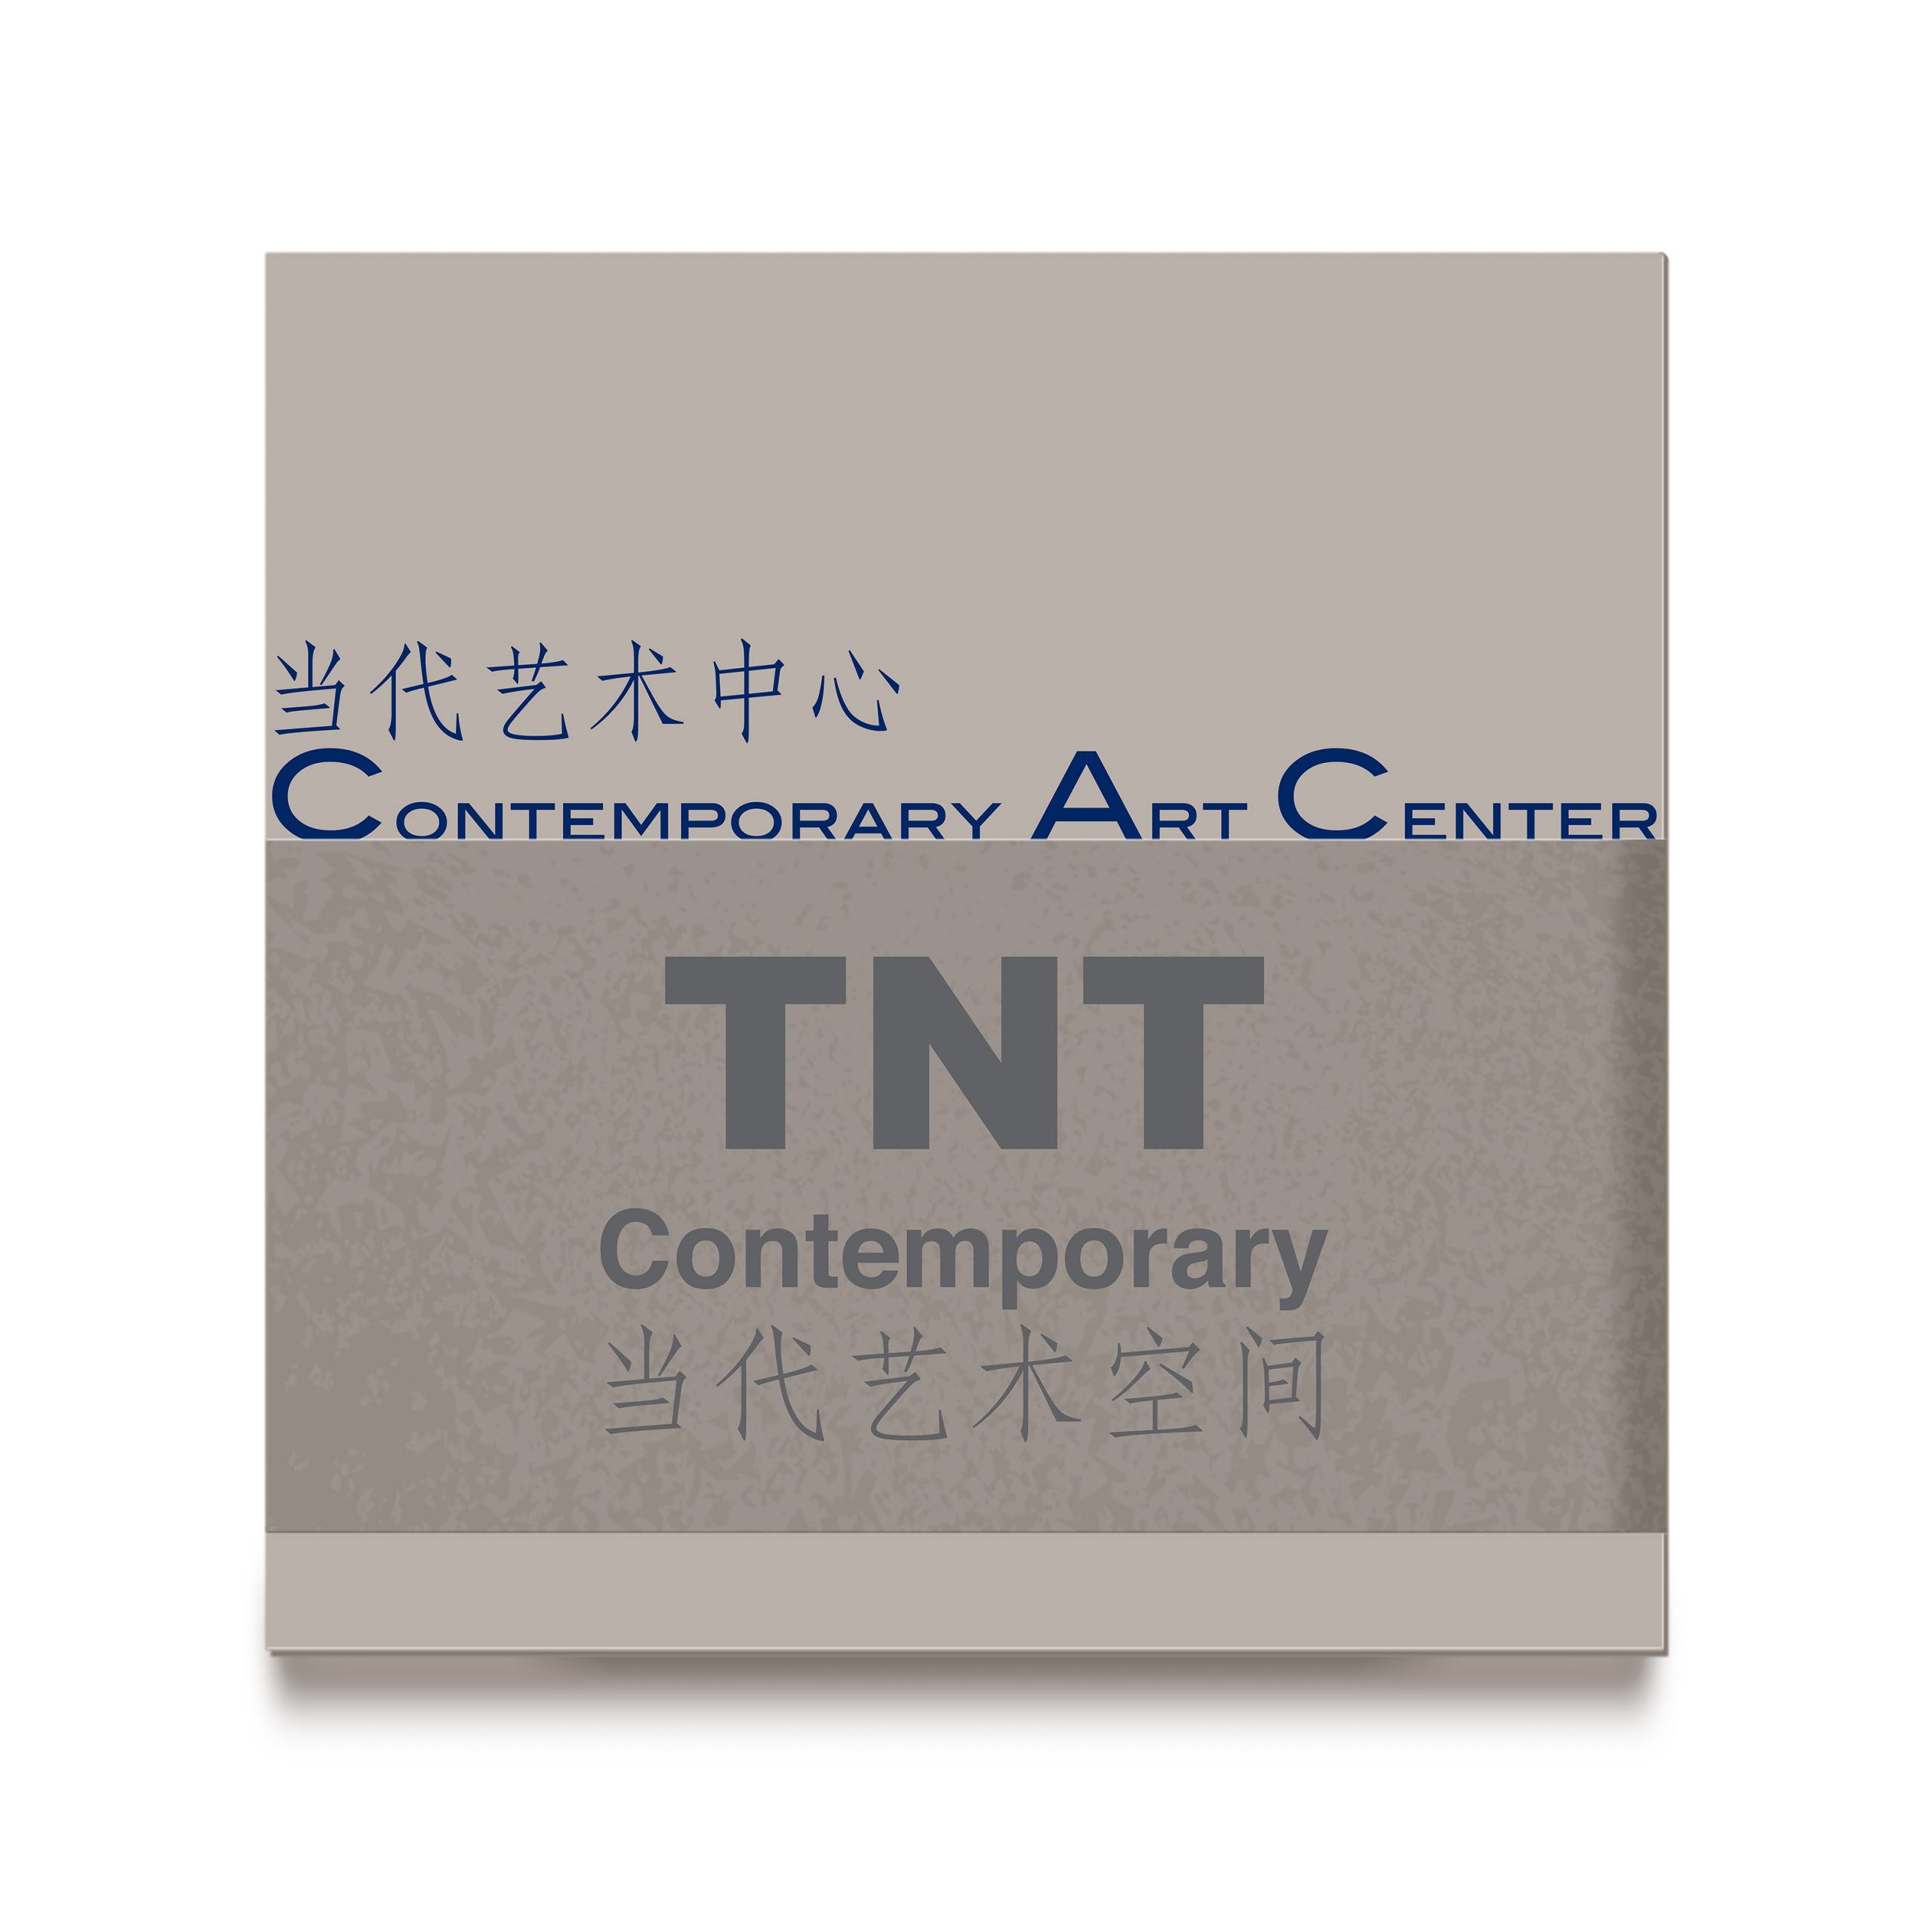 TNT Contemporary Art Center